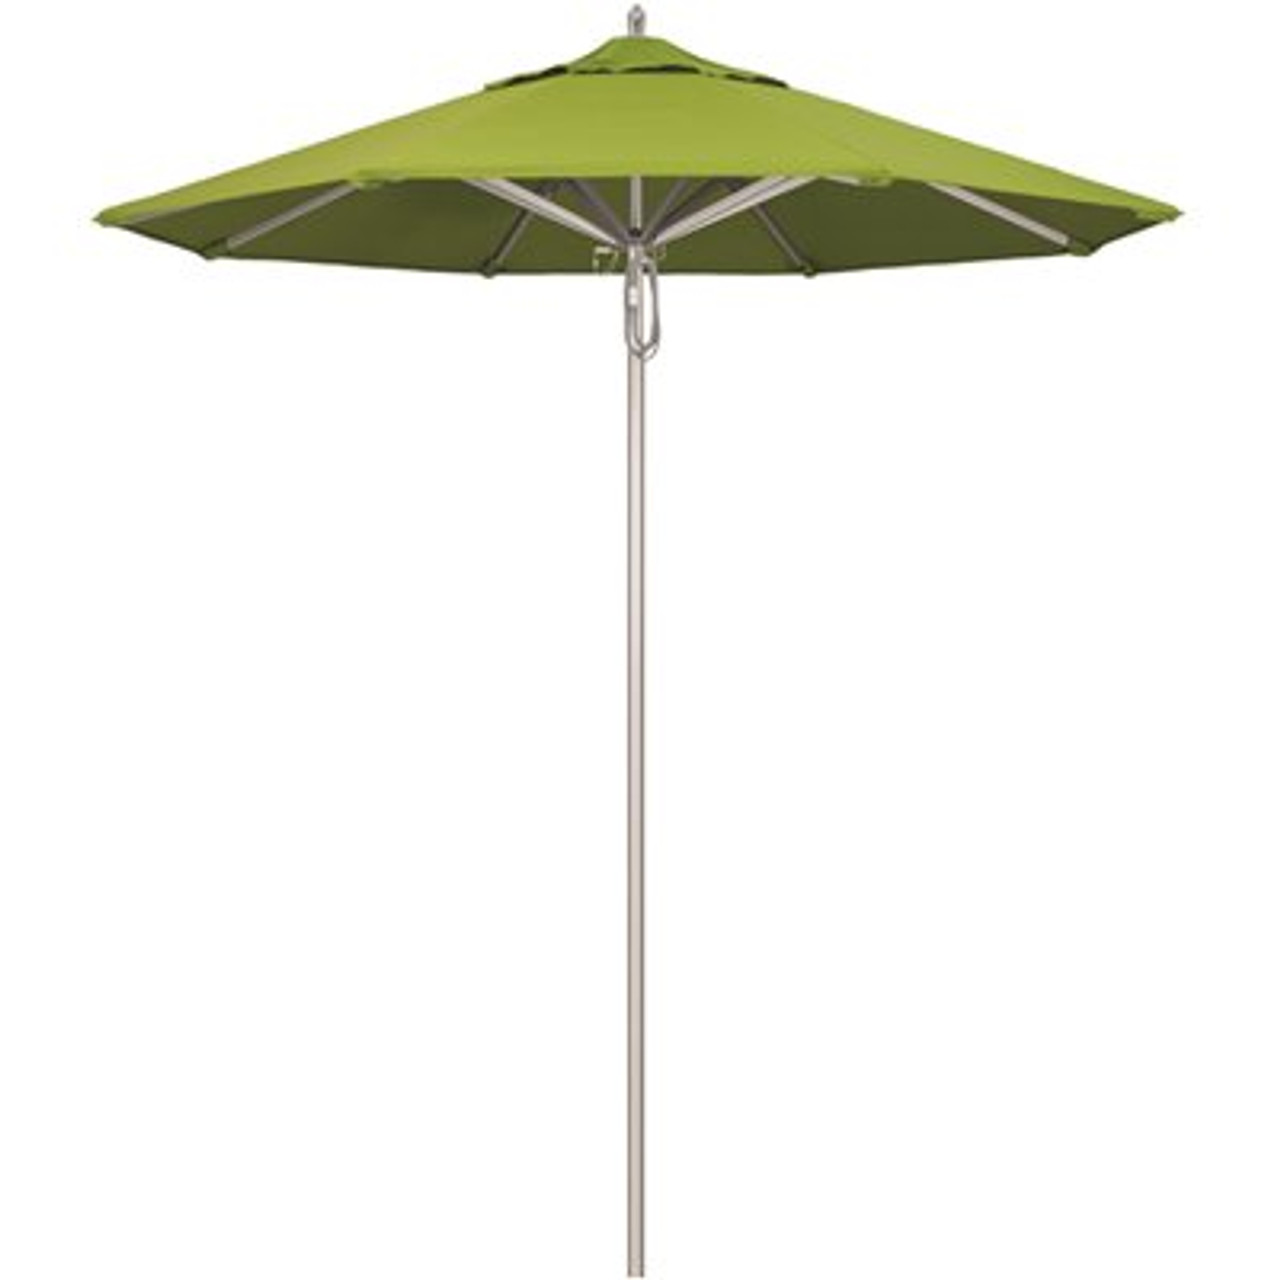 California Umbrella 7.5 ft. Silver Aluminum Commercial Market Patio Umbrella with Pulley Lift in Macaw Sunbrella